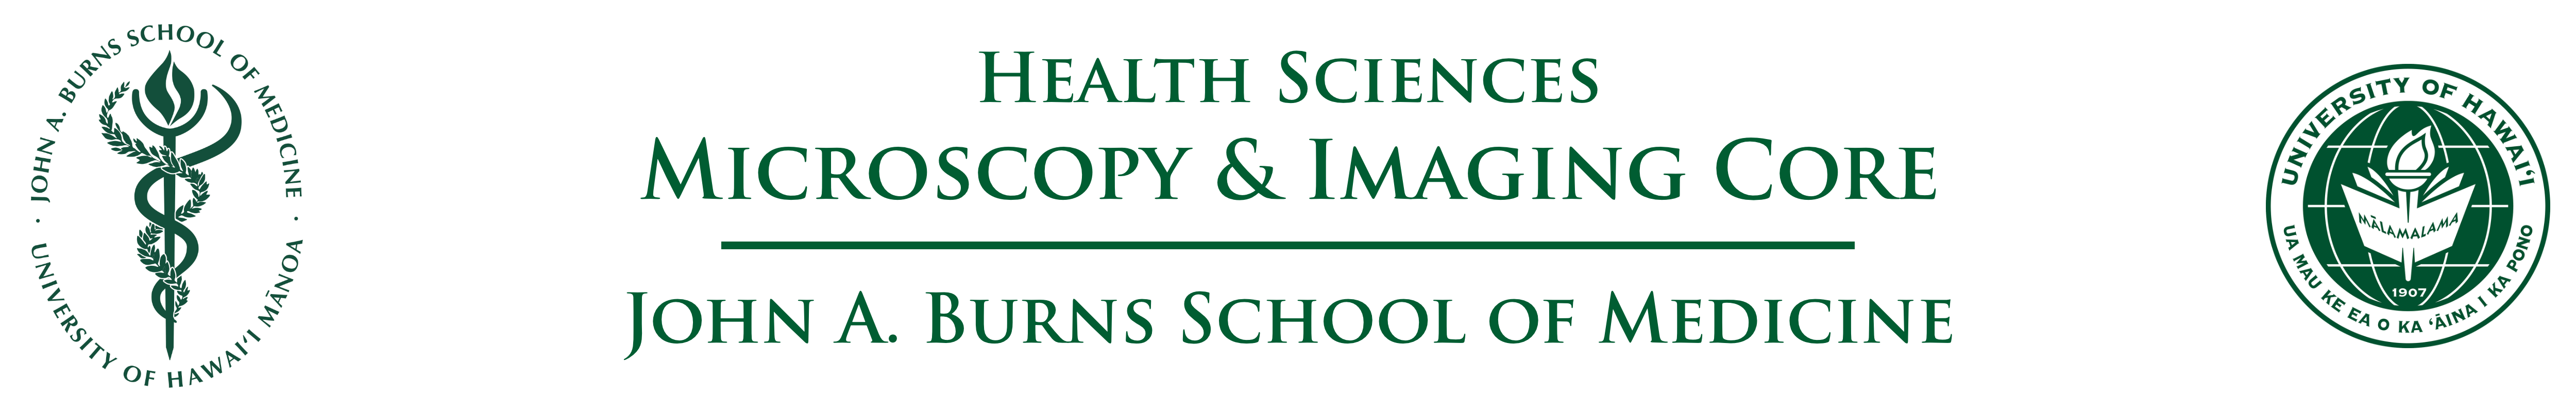 Health Sciences Microscopy & Imaging Core